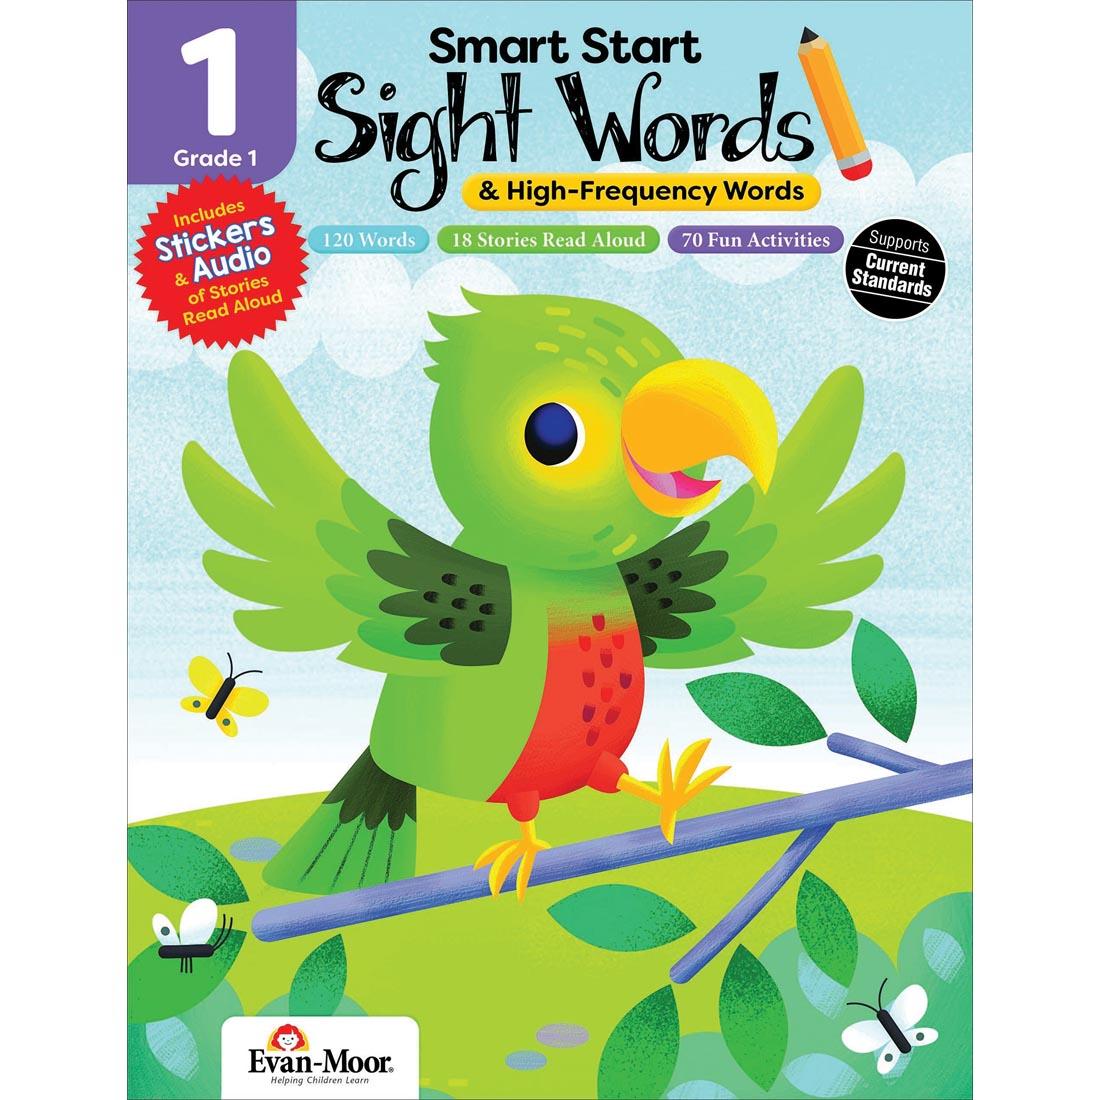 Grade 1 Smart Start Sight Words & High-Frequency Words by Evan-Moor